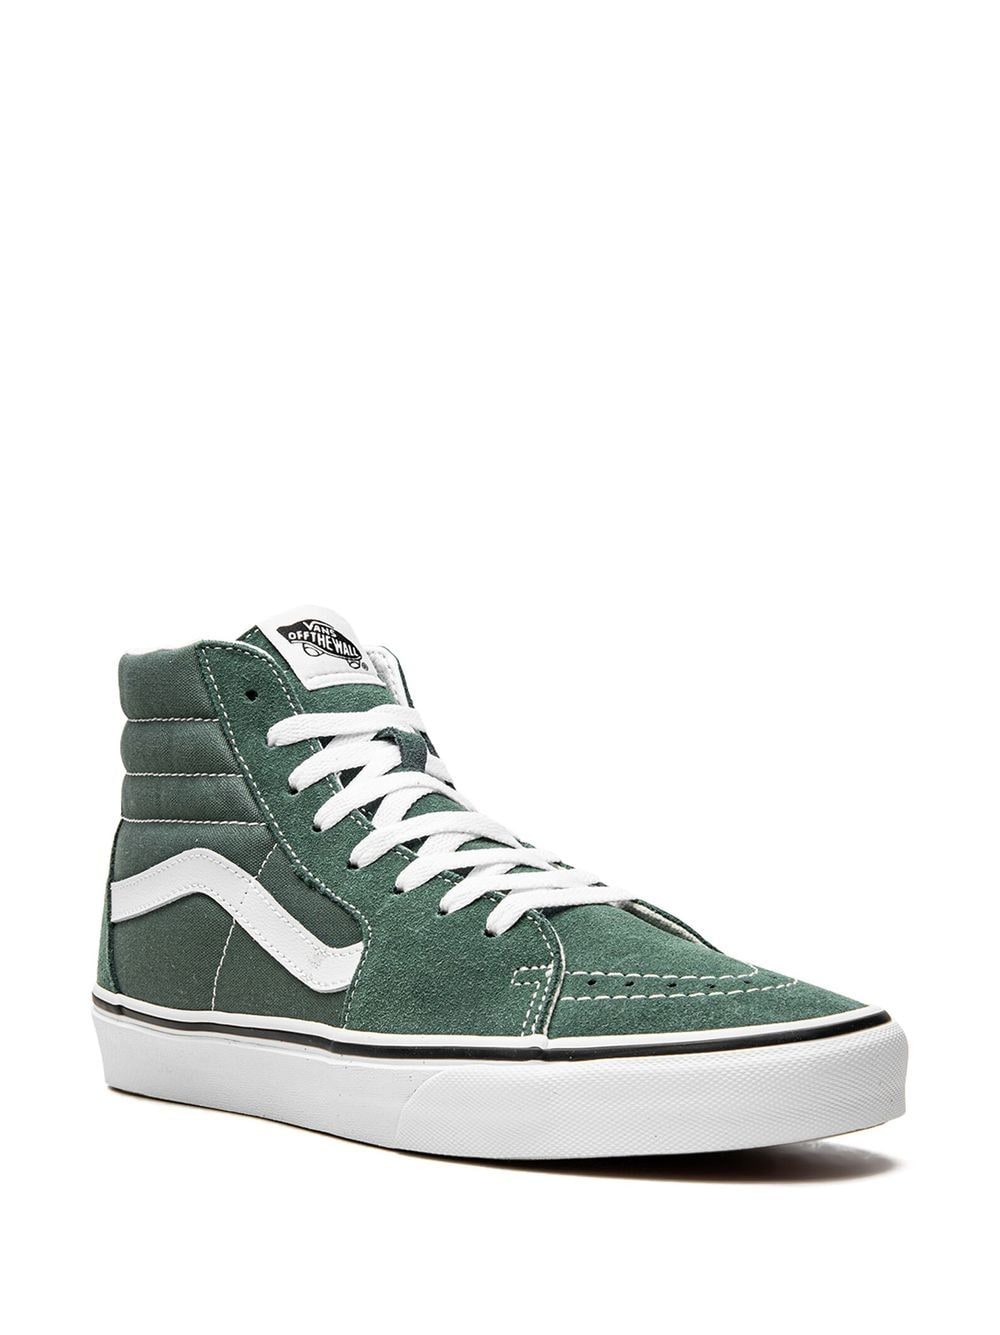 Image 2 of Vans Sk8-Hi "Green/White" sneakers